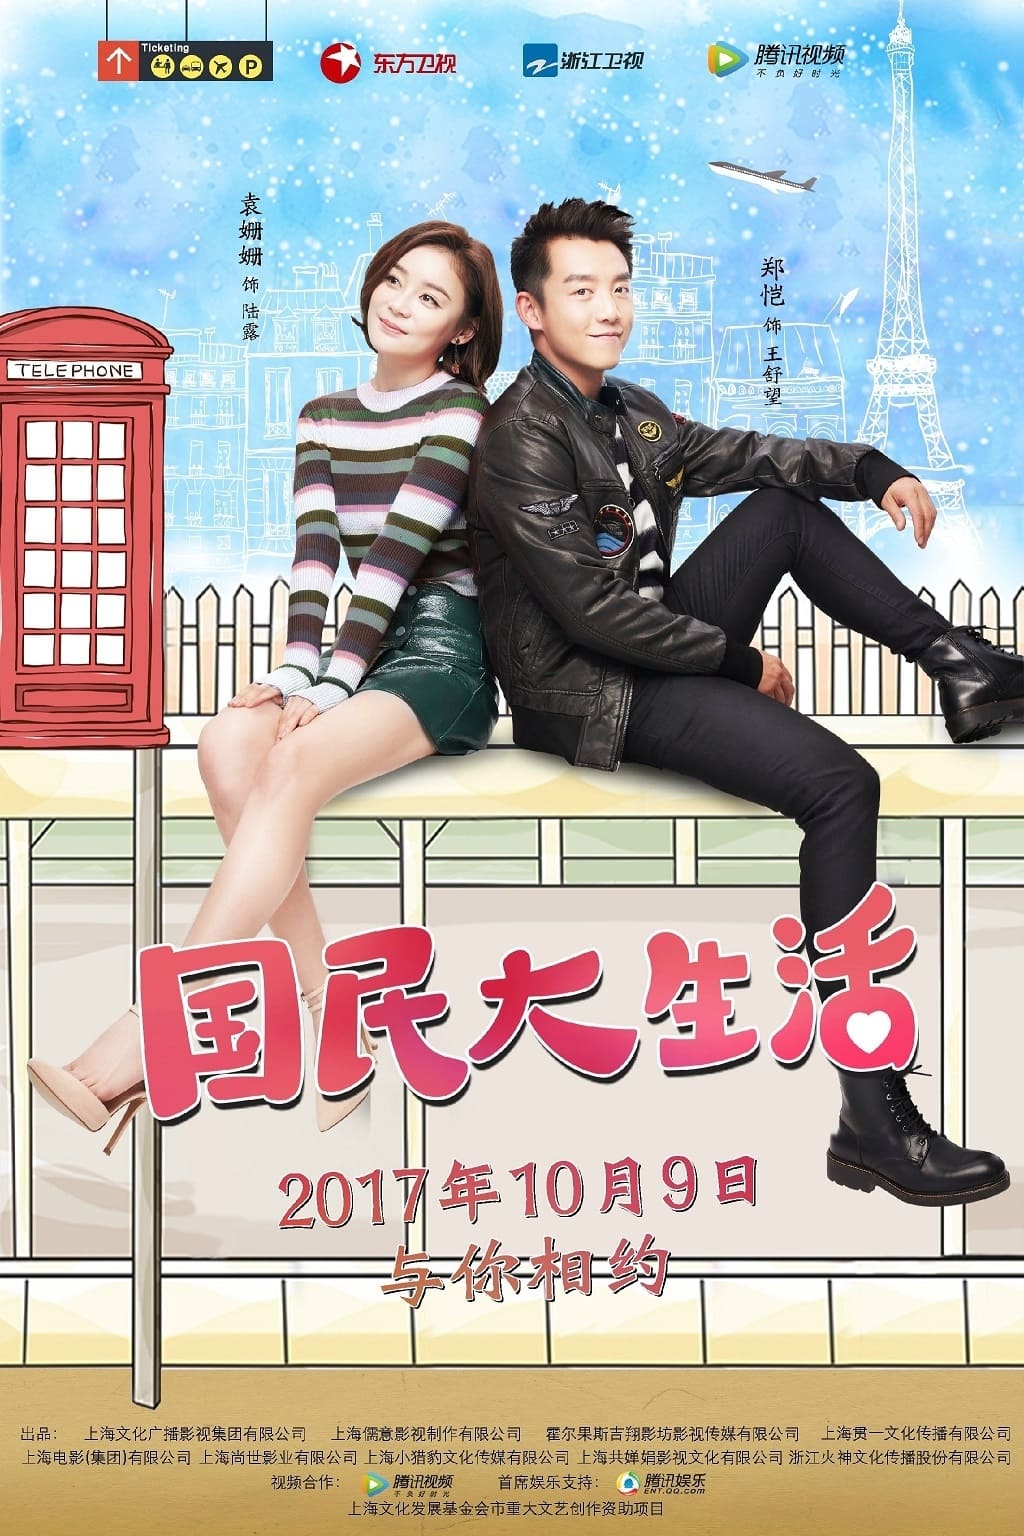 TV ratings for Burn U5 (天生是优我) in South Korea. iqiyi TV series